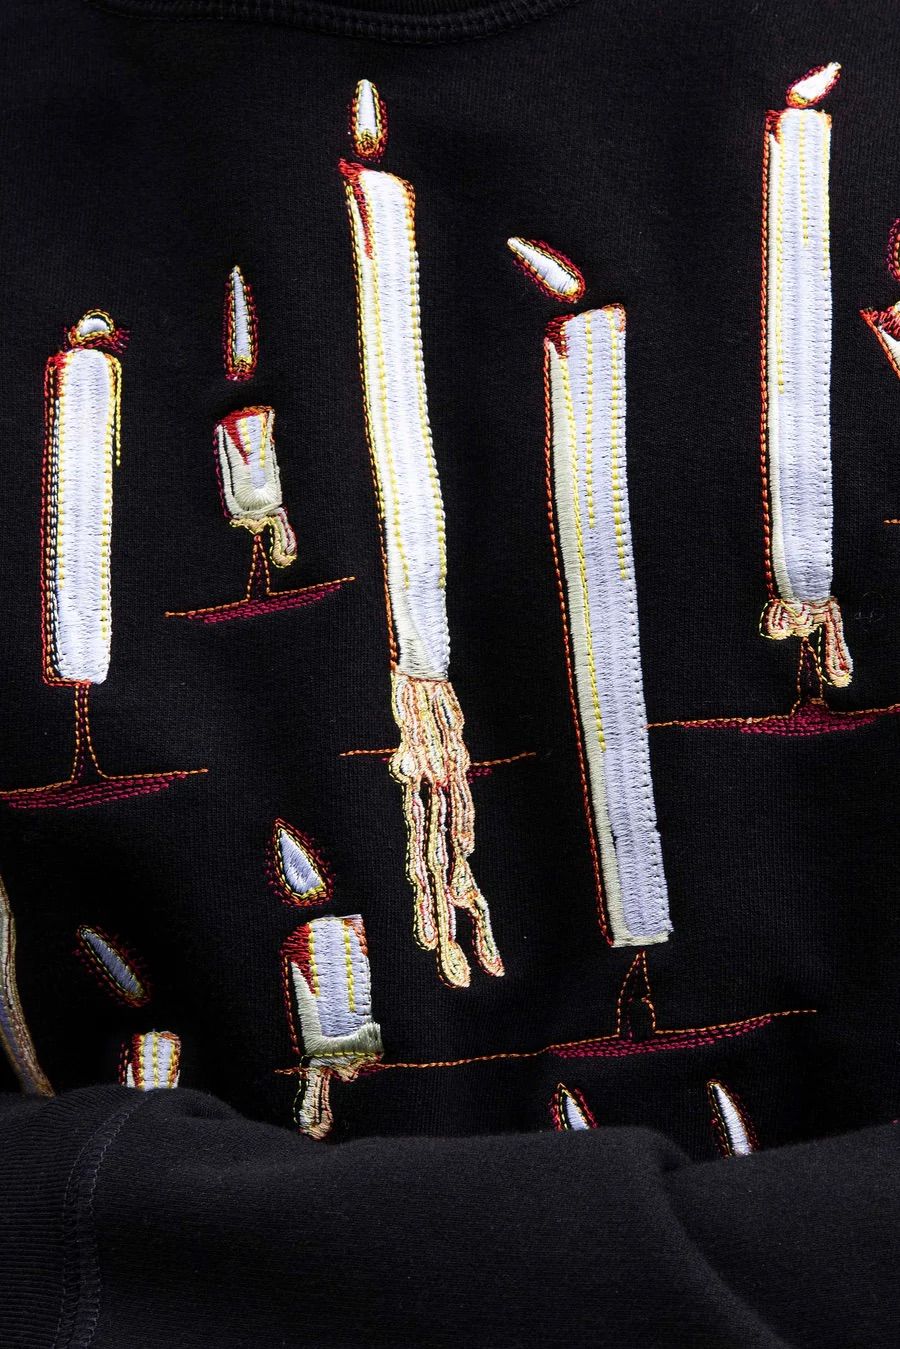 Candle embroidery sweatshirt - Misericordia